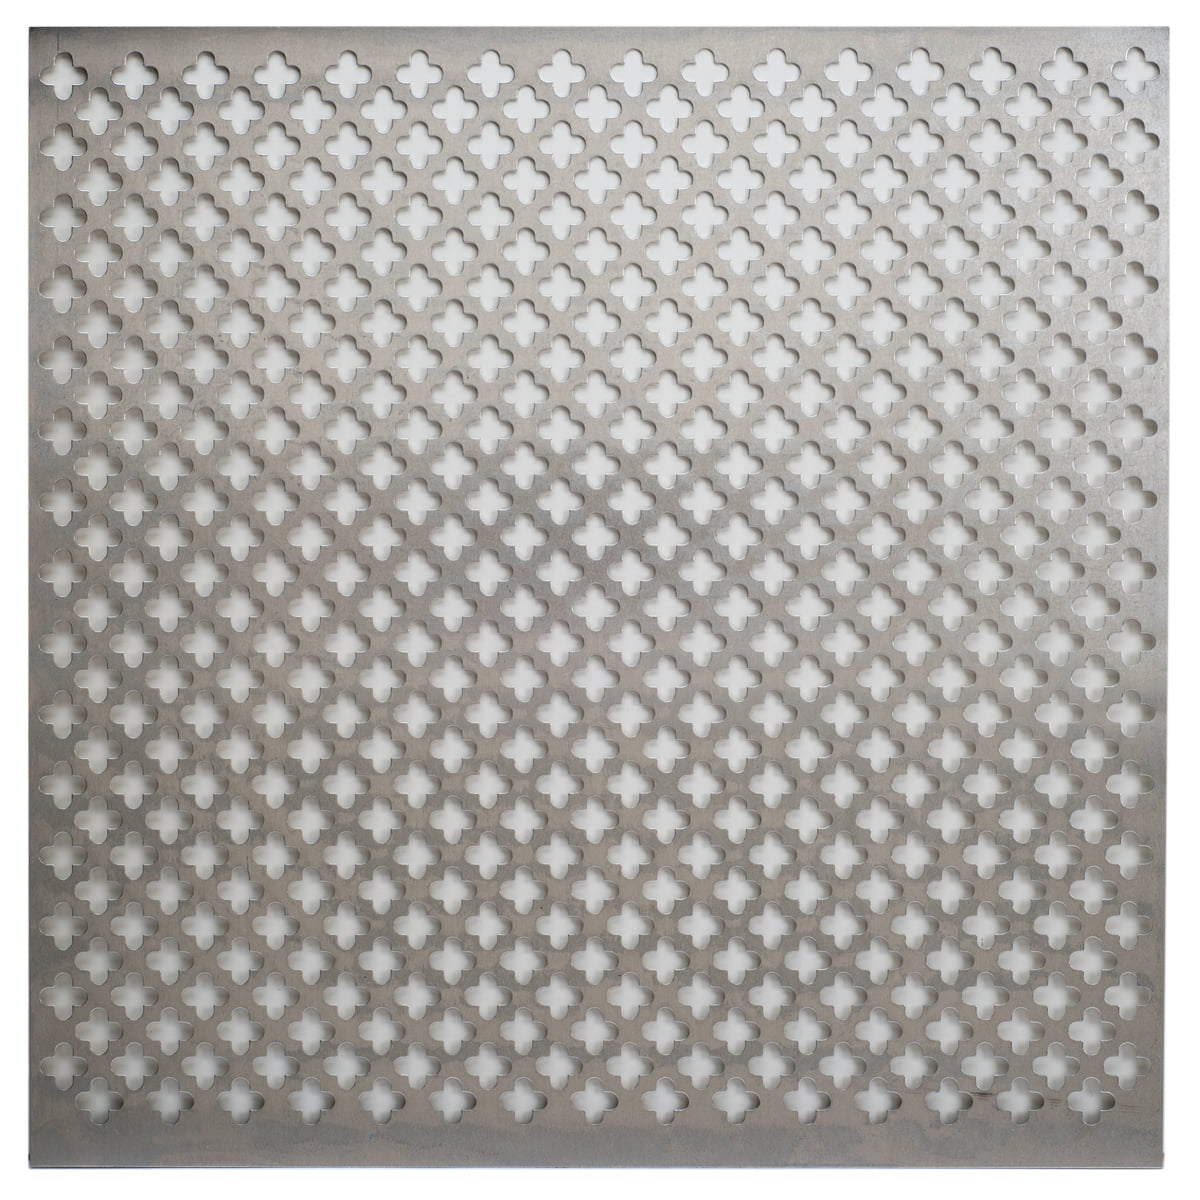 Elliptical M-D Hobby & Craft Aluminum Metal Sheet 12 x 24-inch 